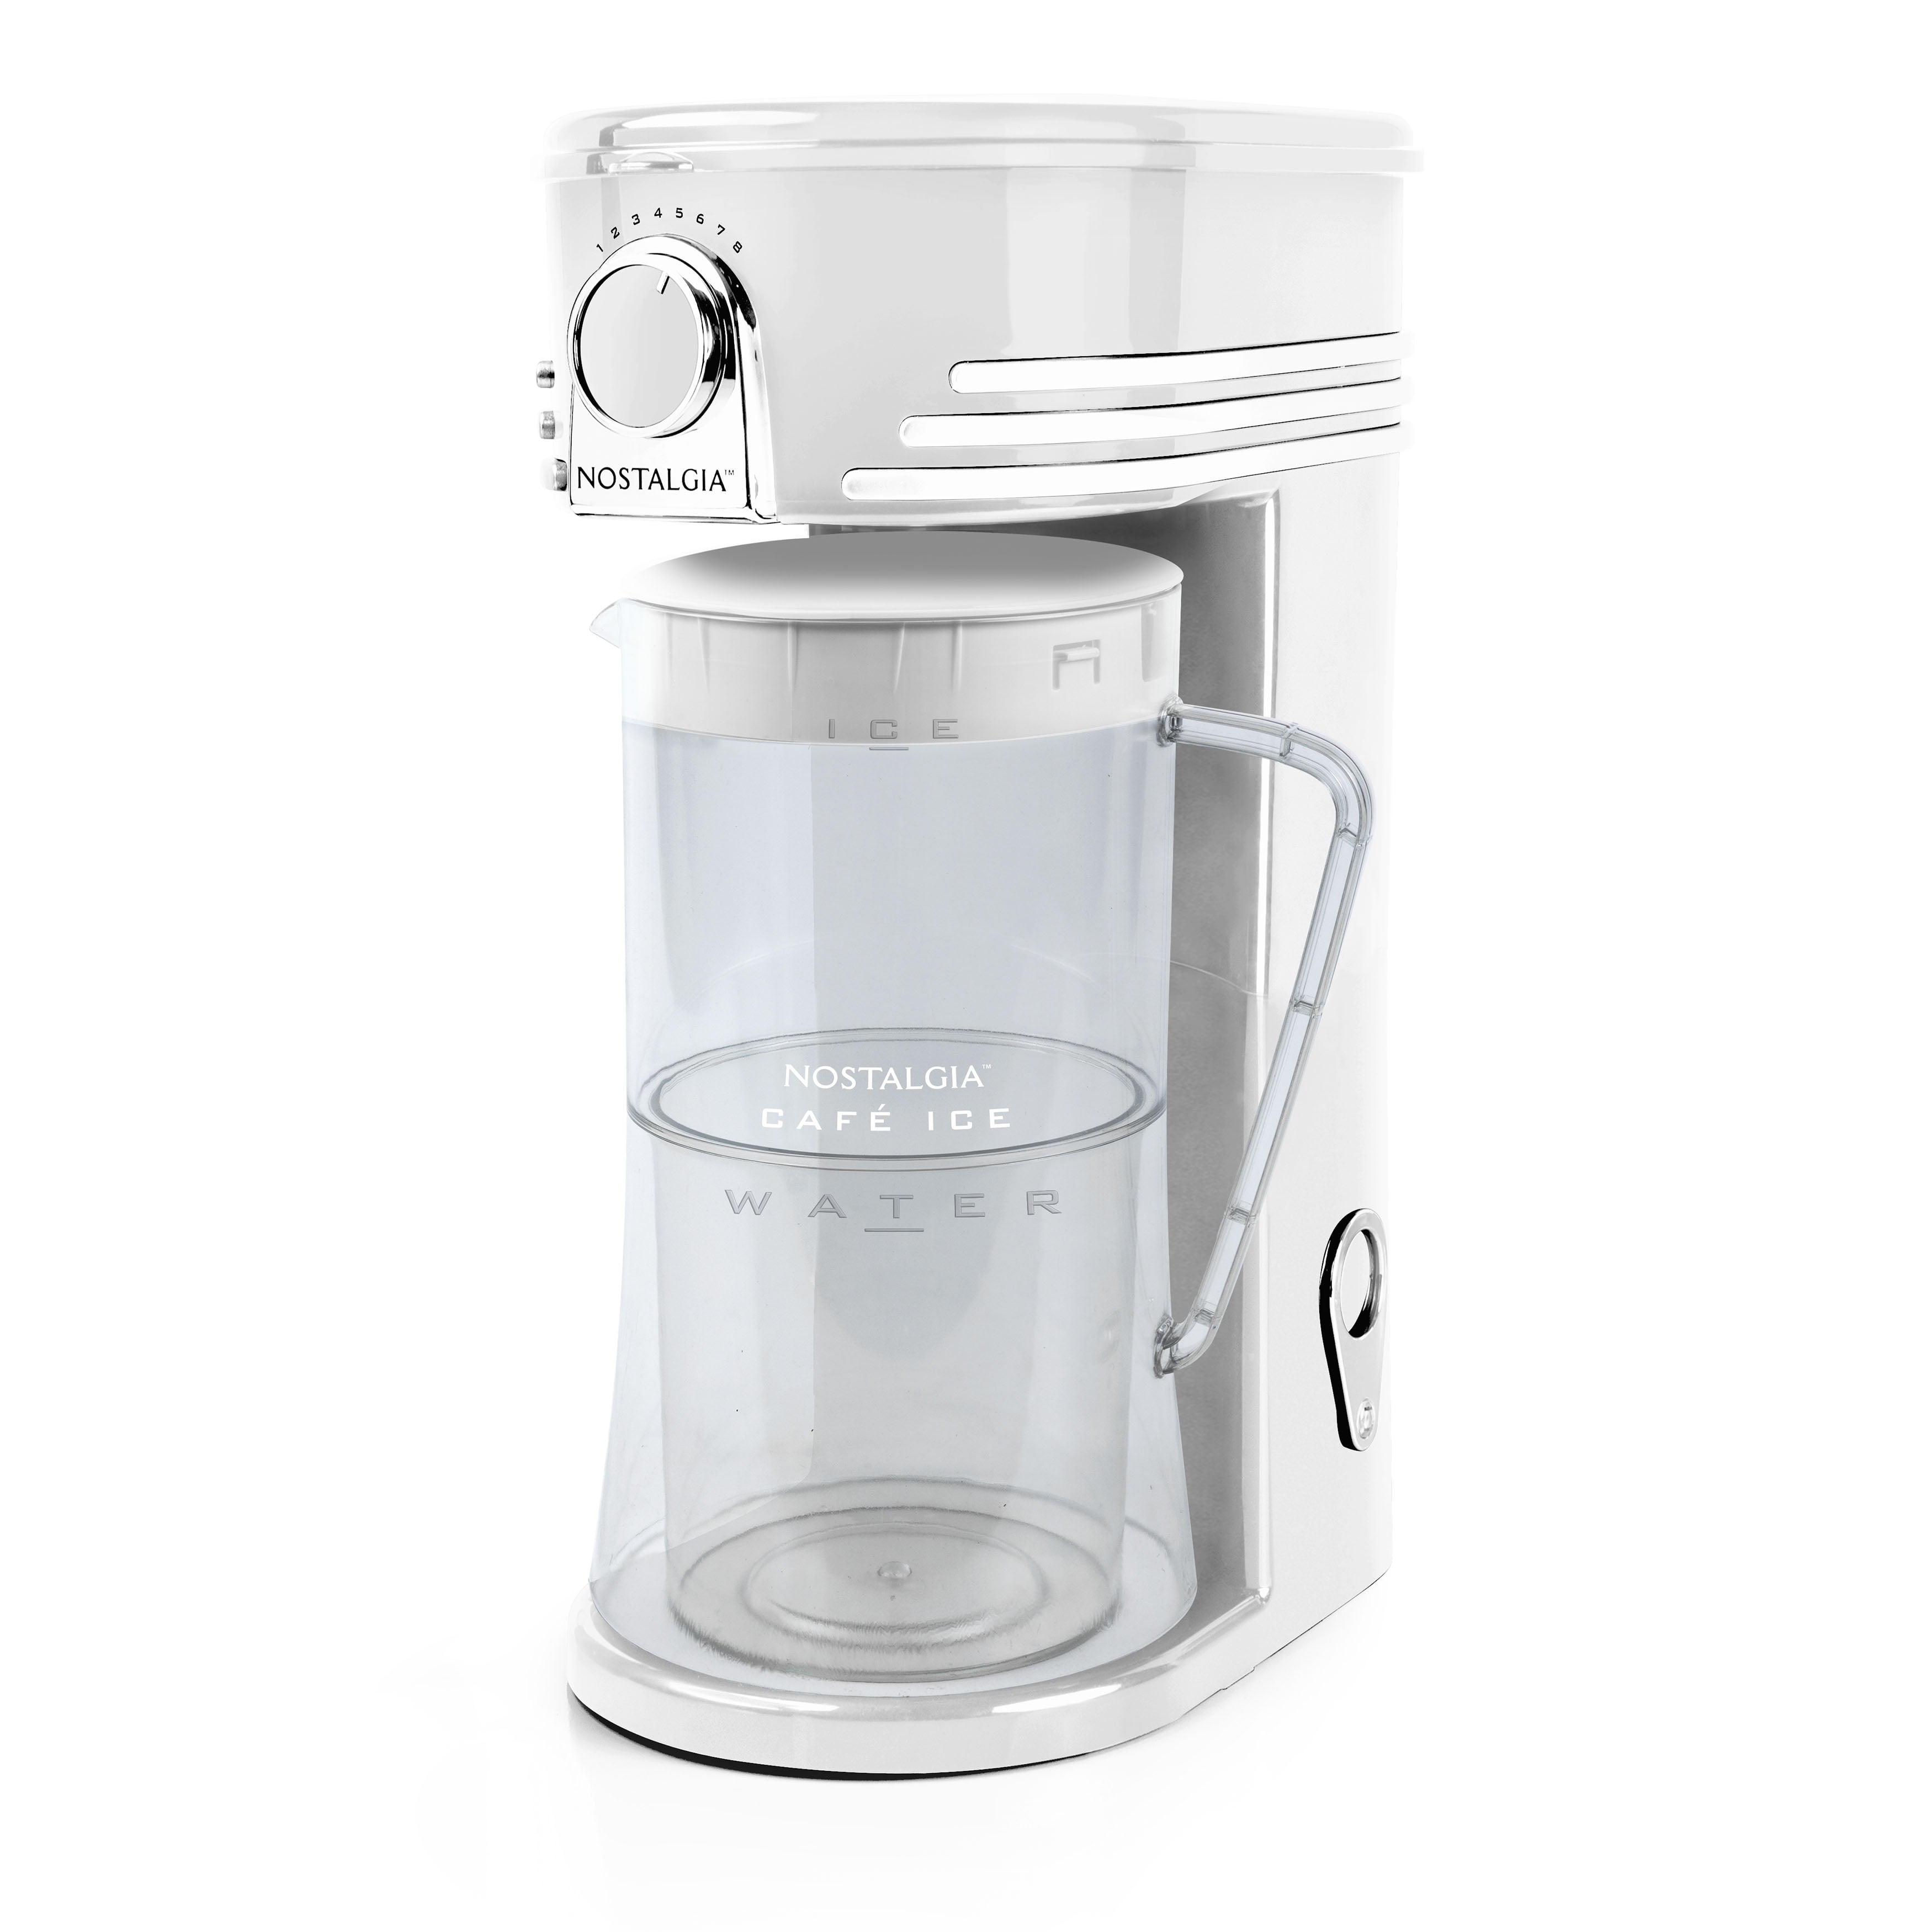 Newco 3 Gallon Ice Tea Maker Dispenser - Essential Wonders Coffee Company